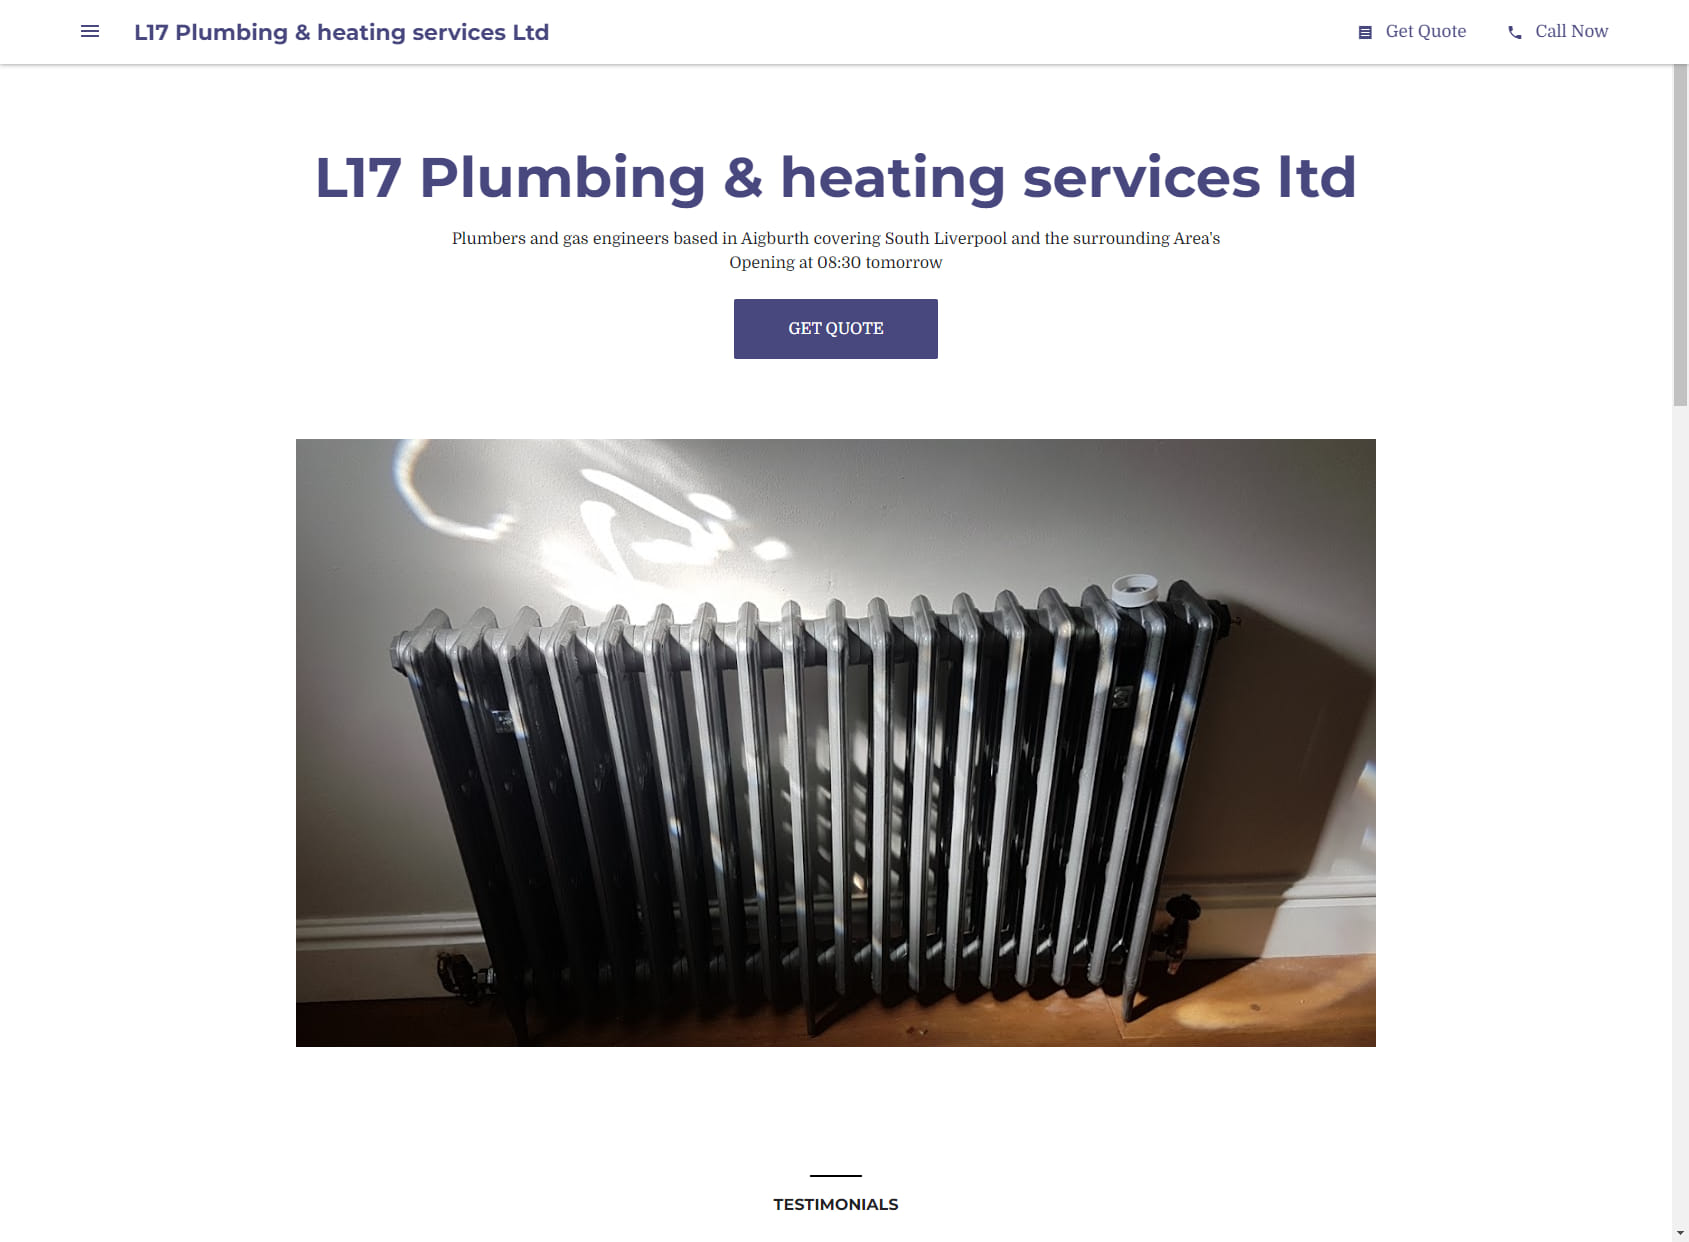 L17 Plumbing & heating services Ltd